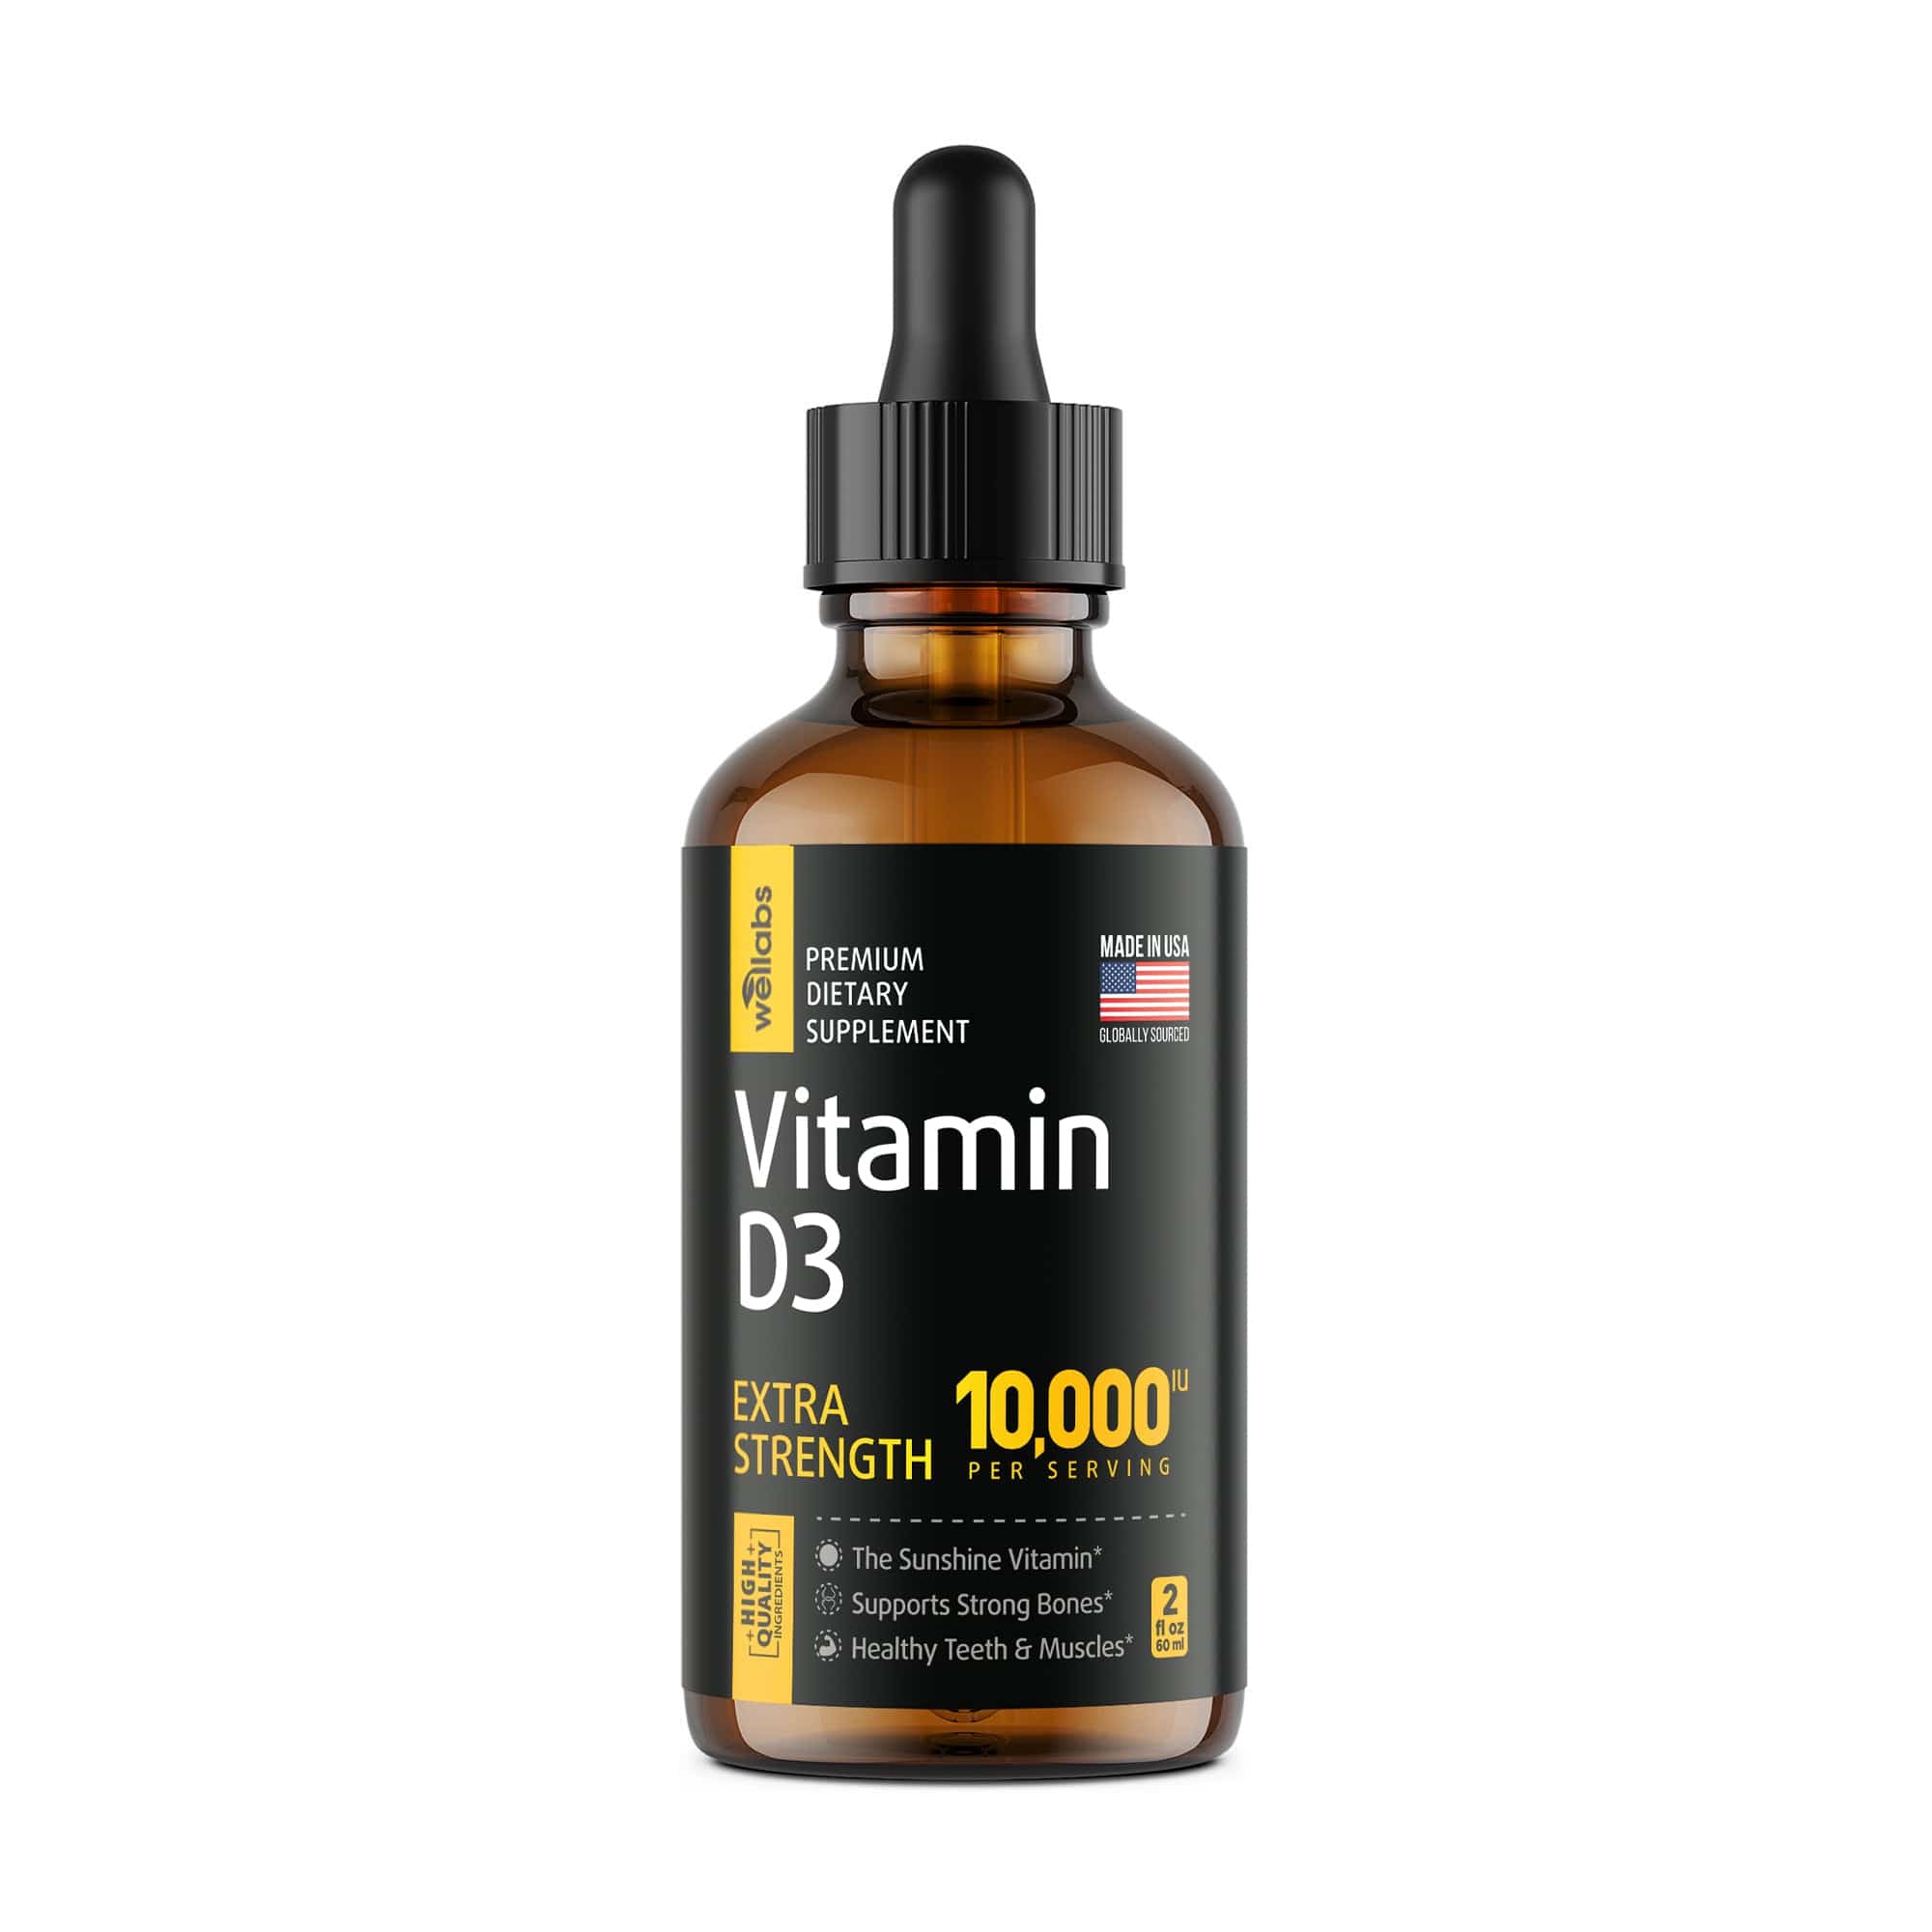 Vitamina D3 Liquida